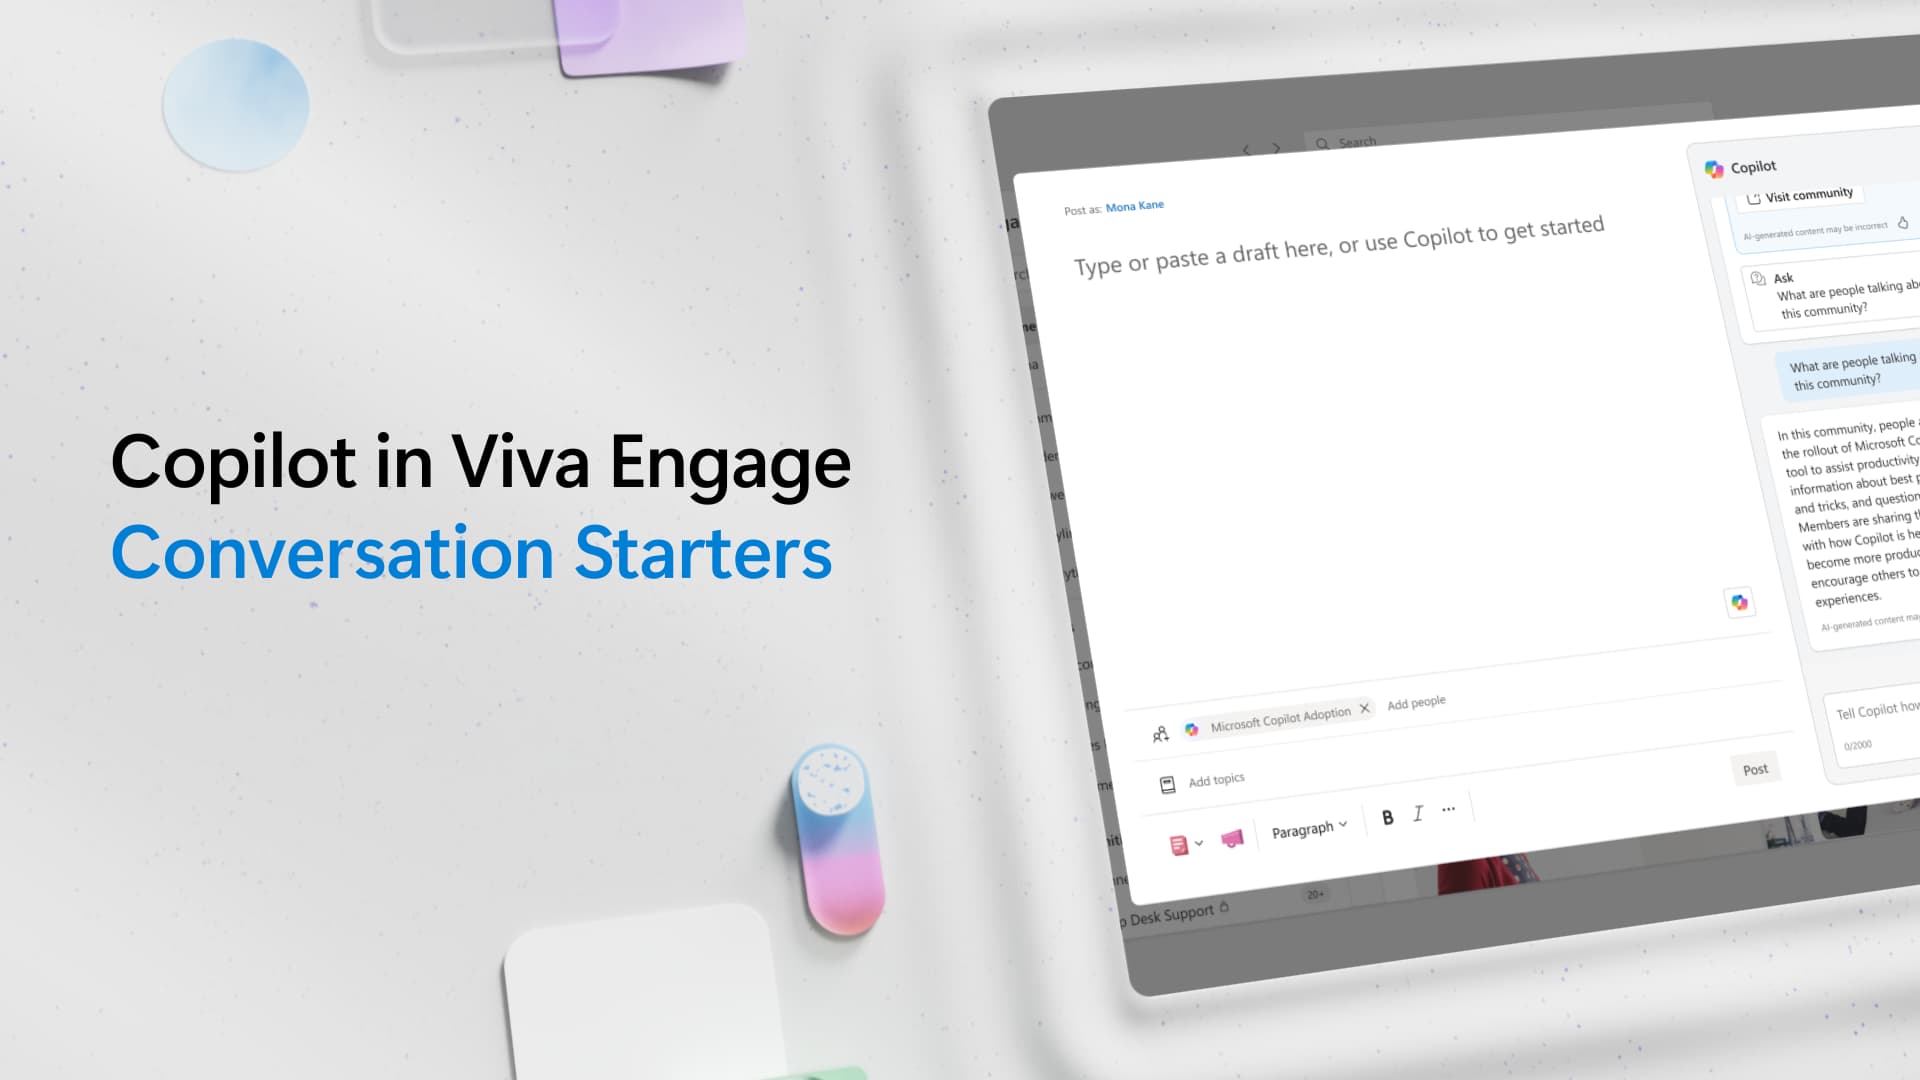 Video: Conversation Starter in Viva Engage